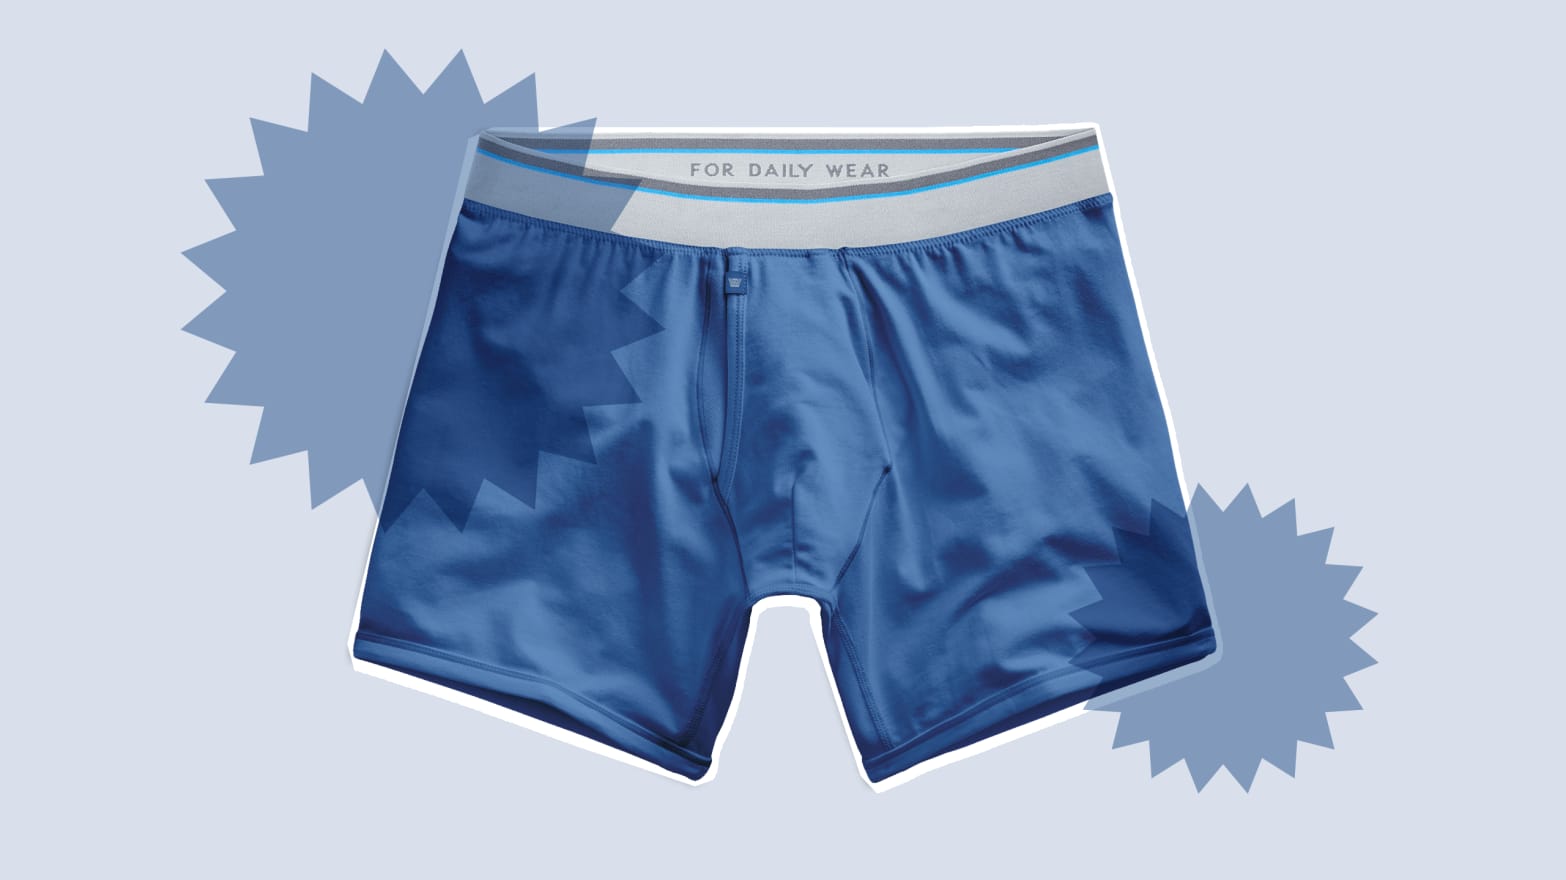 Mack Weldon Men’s Underwear Boxer Briefs Review